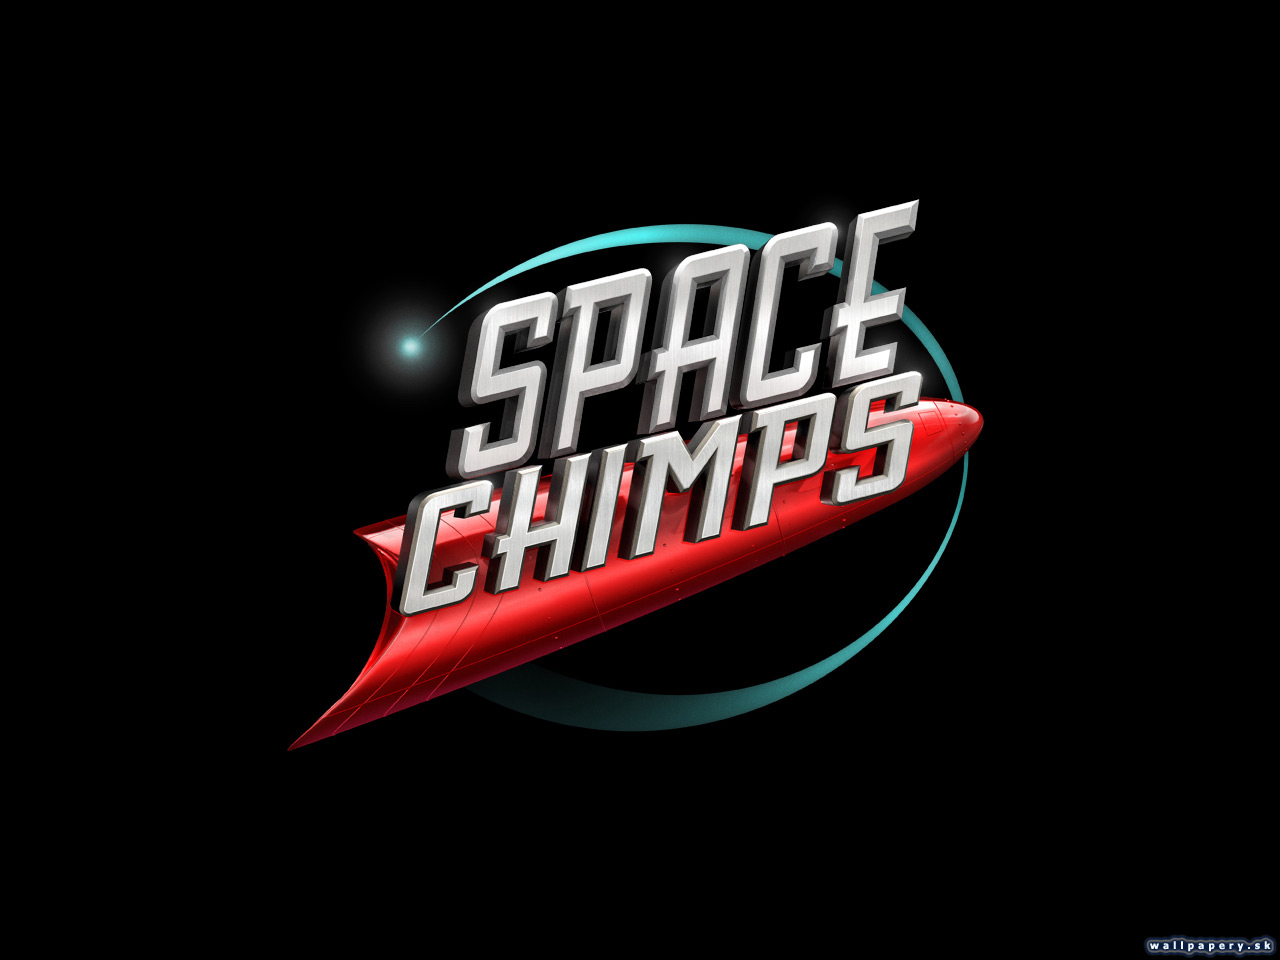 Space Chimps - wallpaper 12